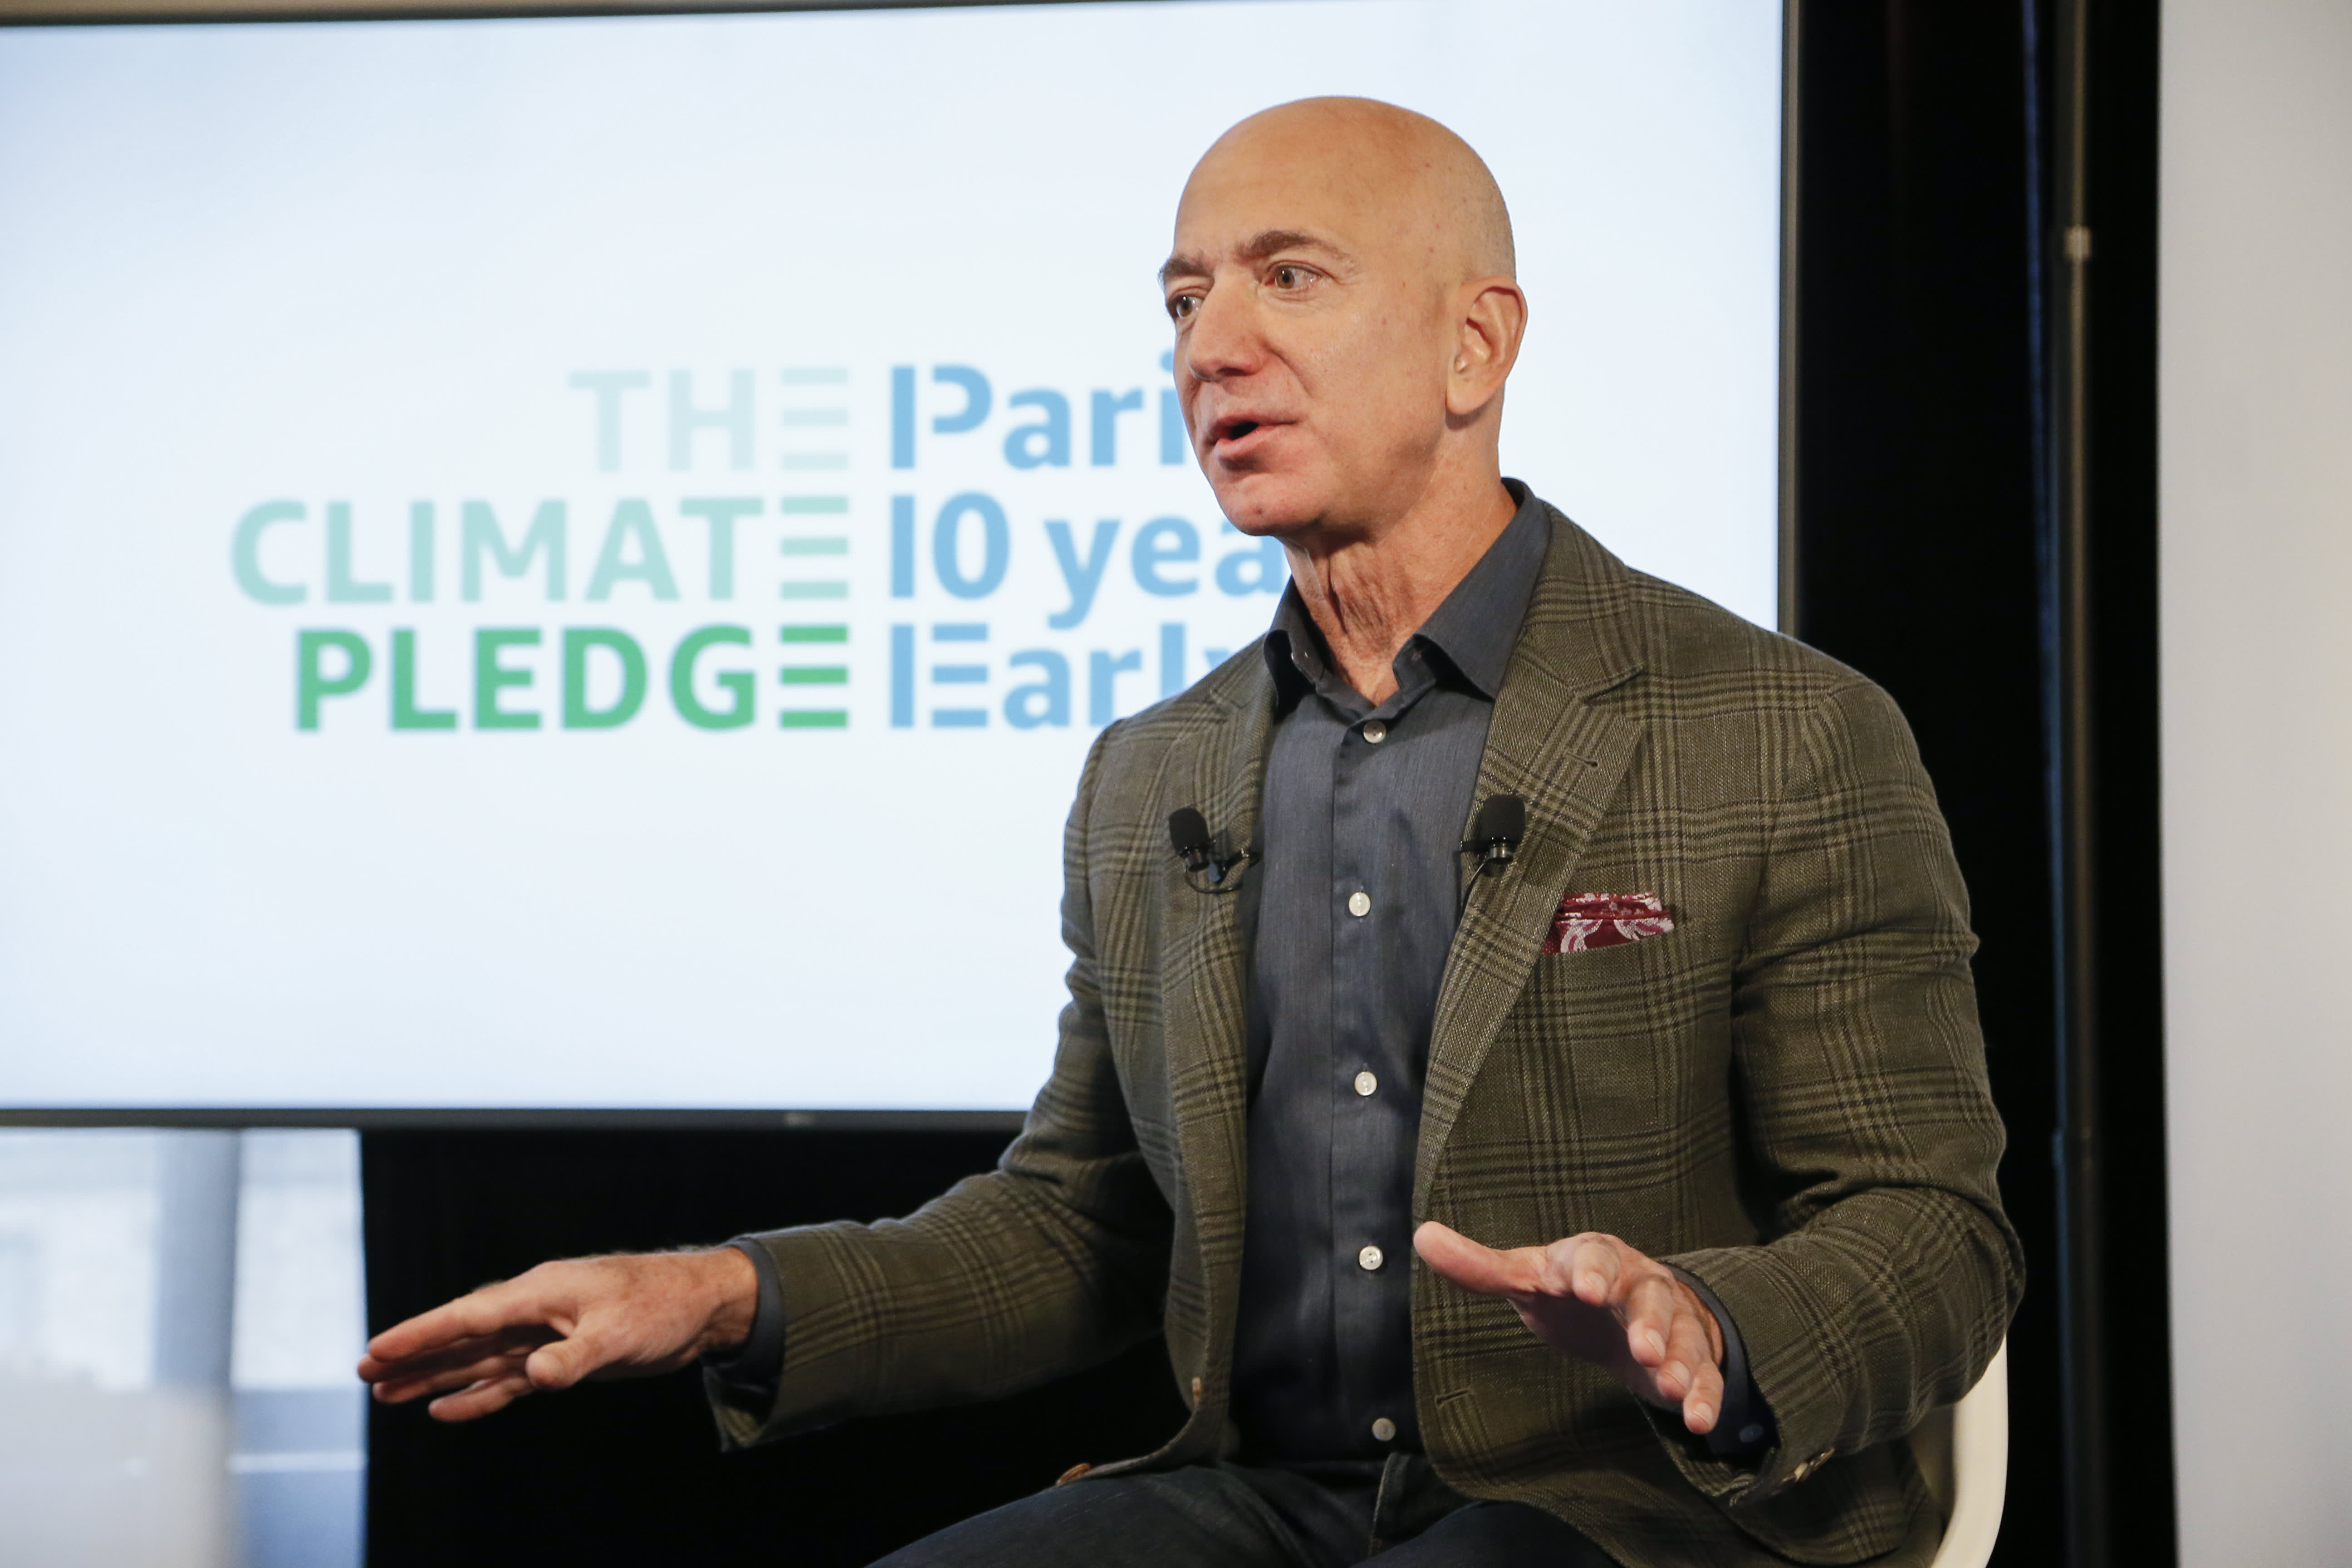 Jeff Bezos cam kết bảo tồn 1 tỷ đô la thông qua Quỹ Trái đất Bezos